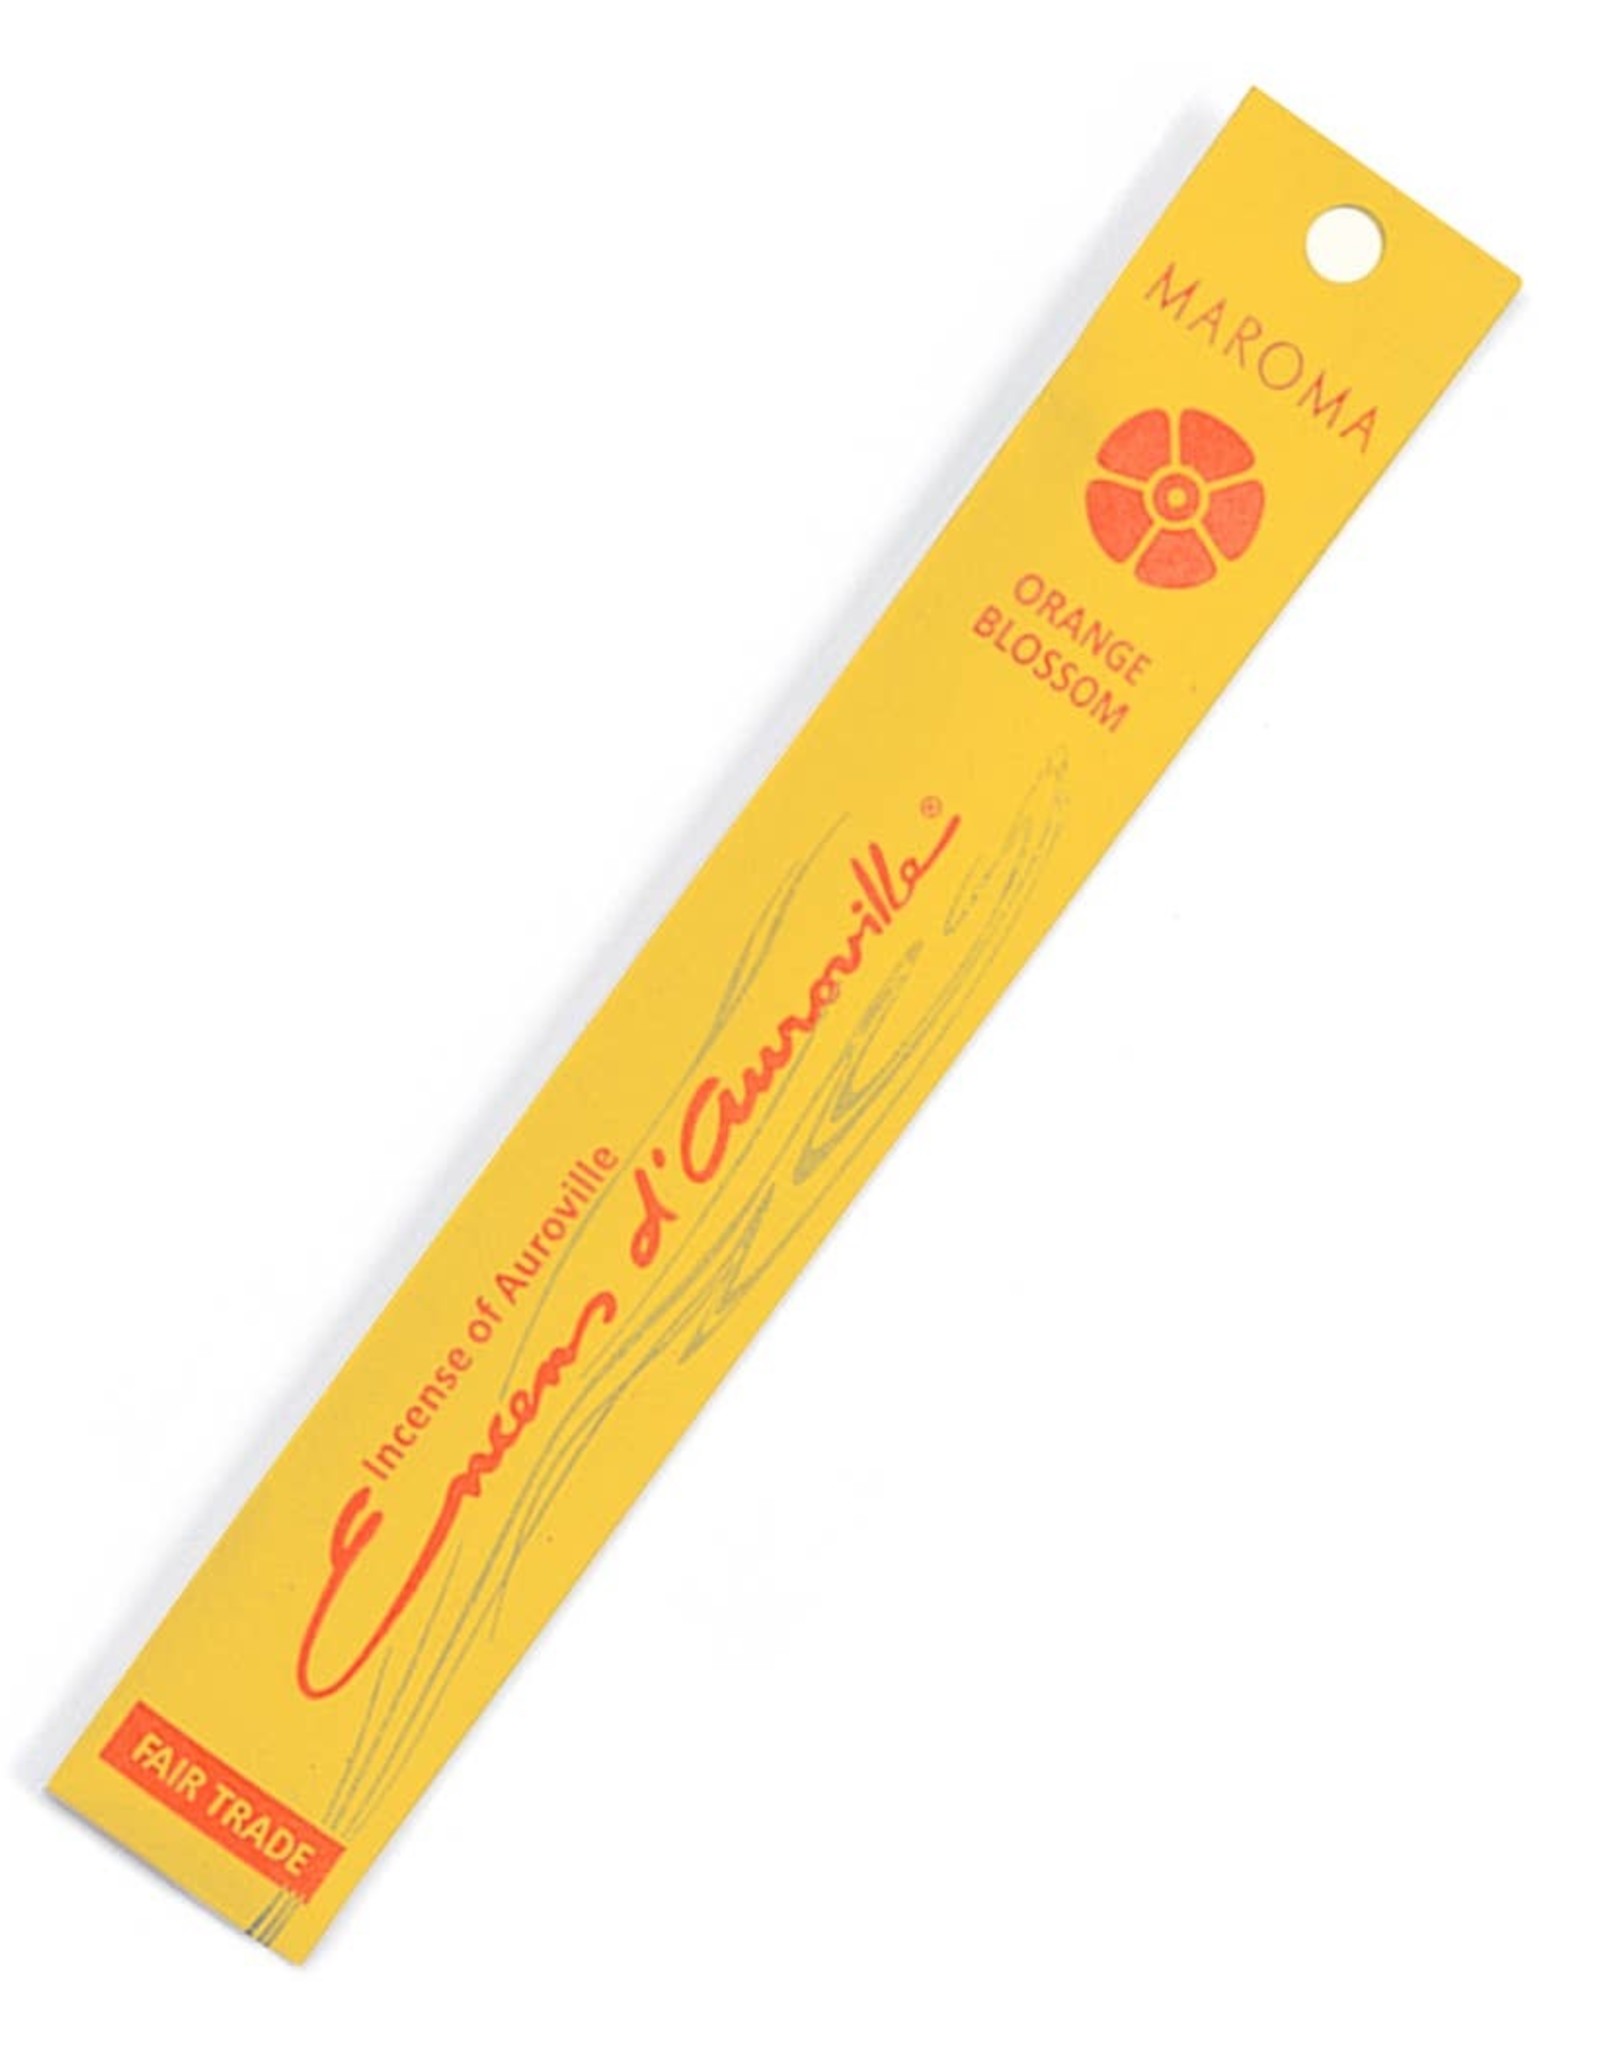 Maroma Orange Blossom Premium Stick Incense